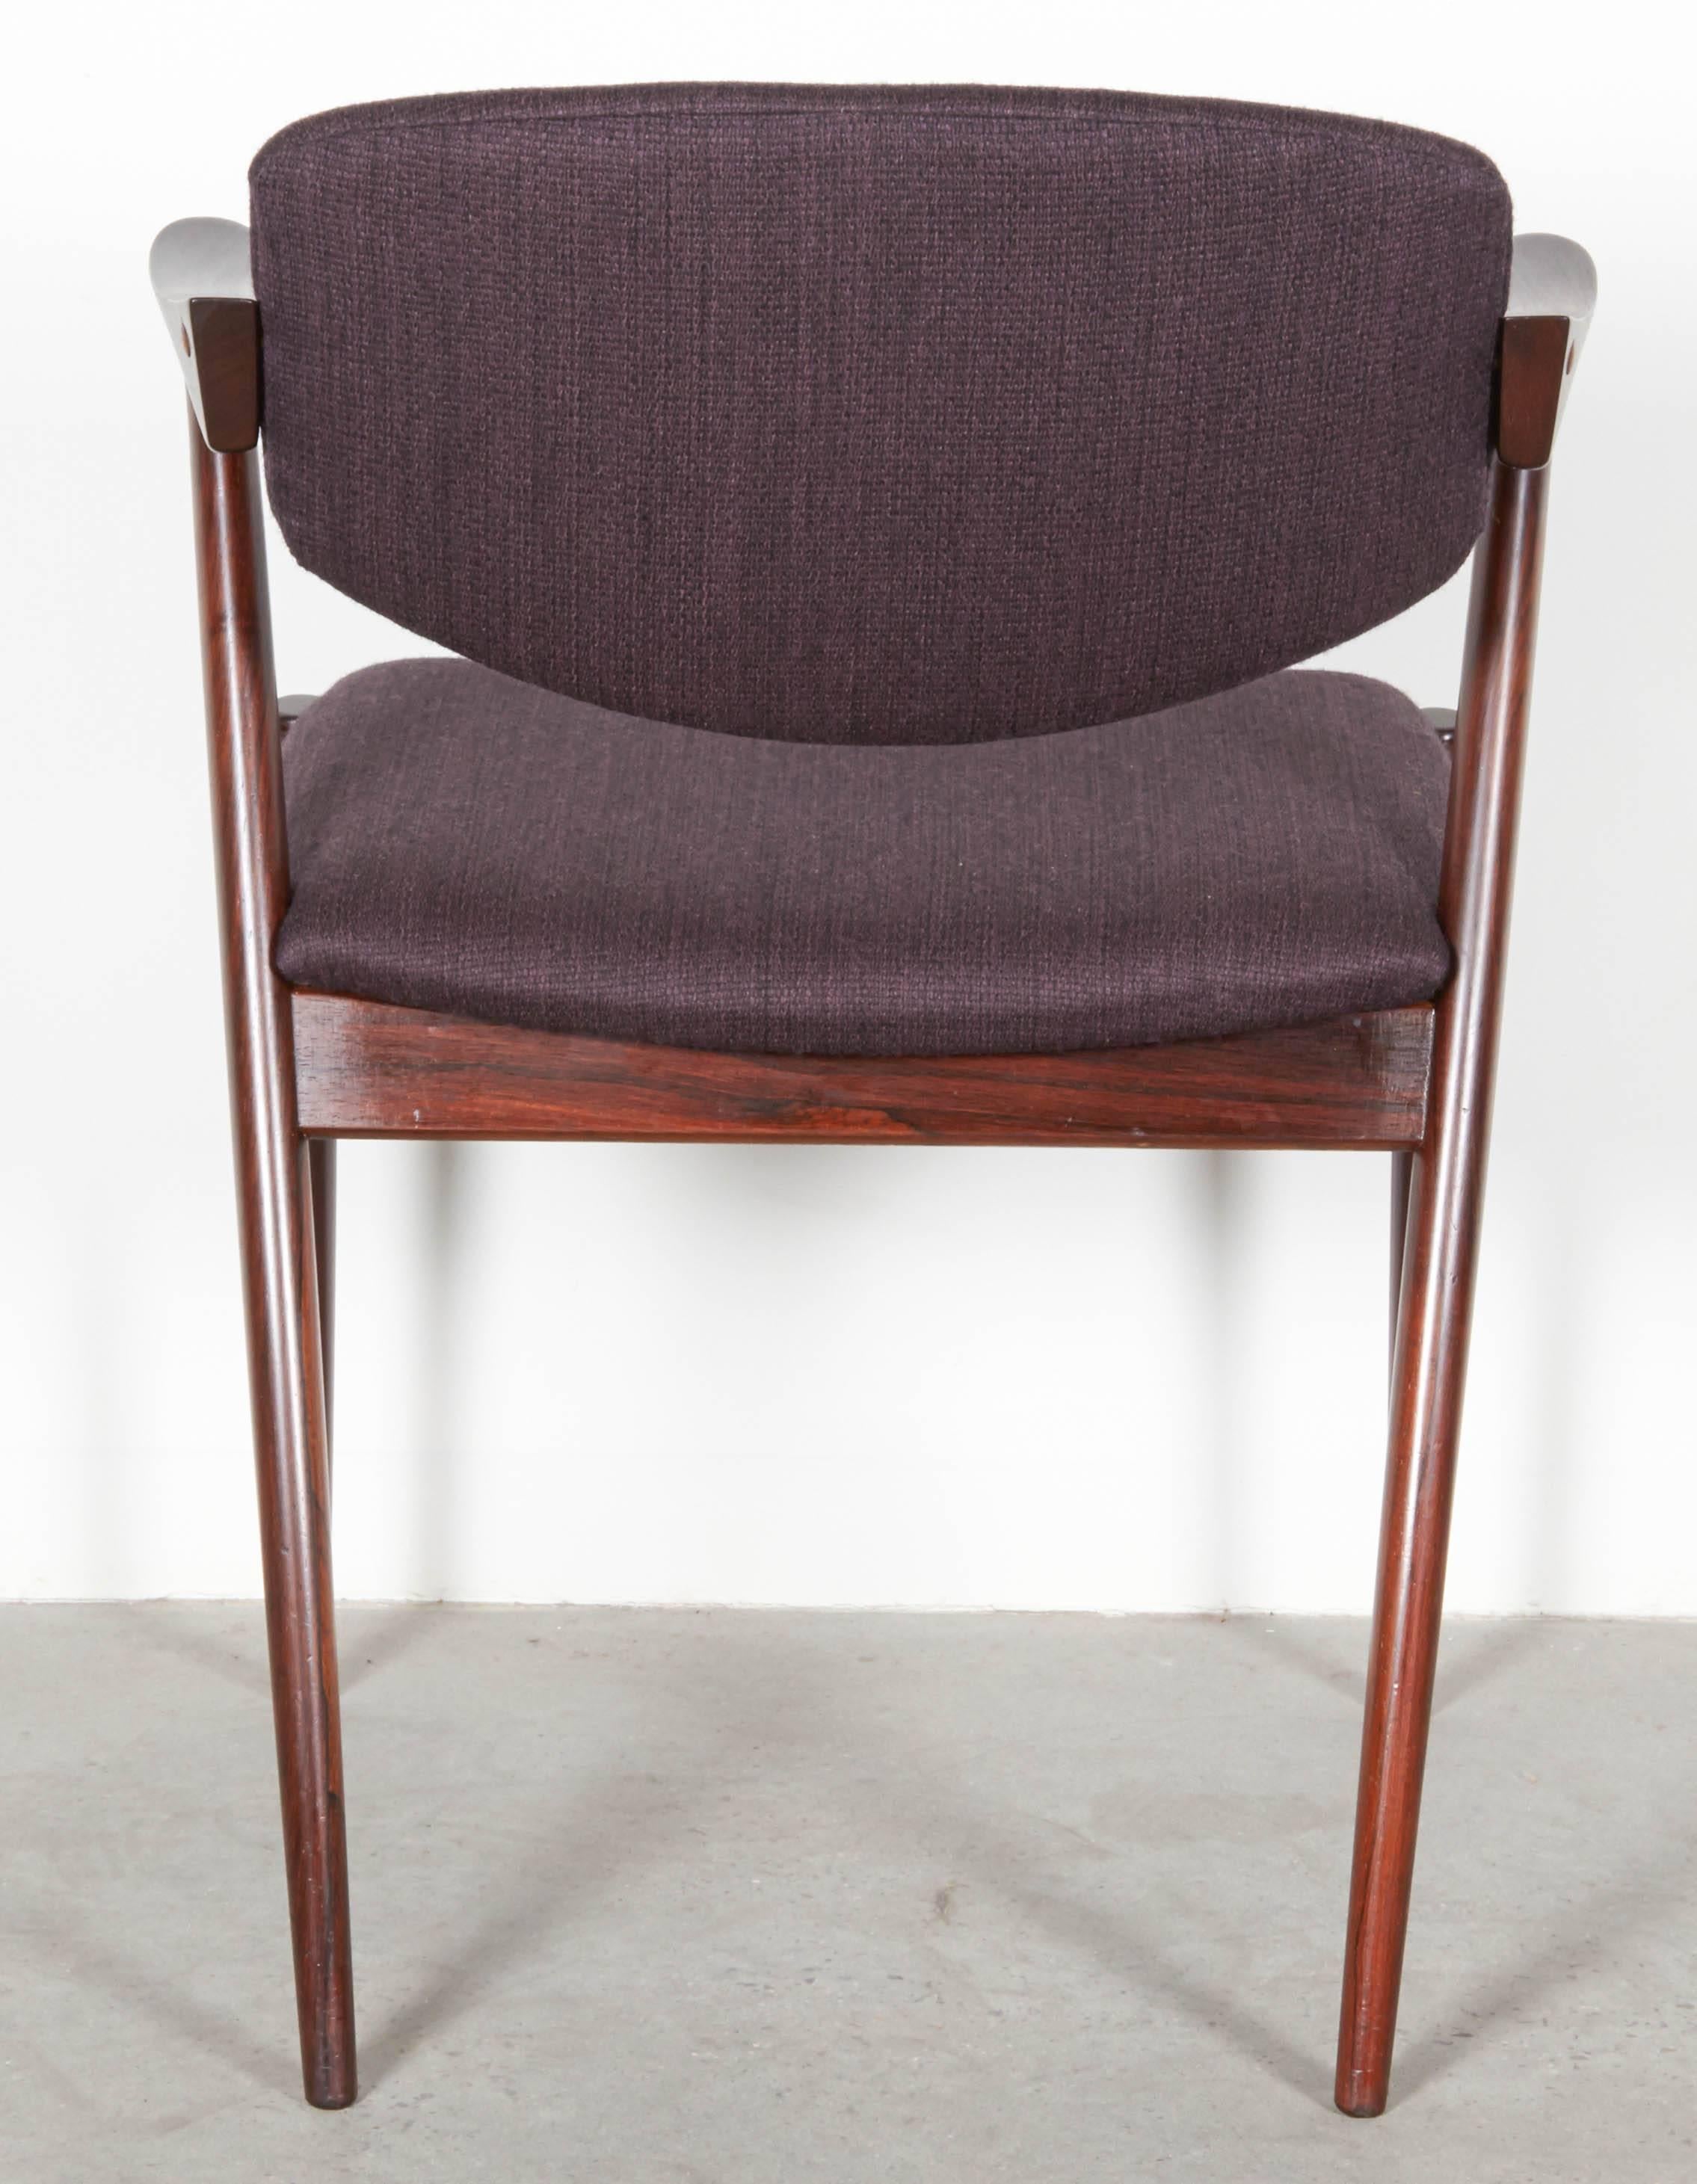 Oiled Kai Kristiansen No. 42 Dining Chairs, Set of 8